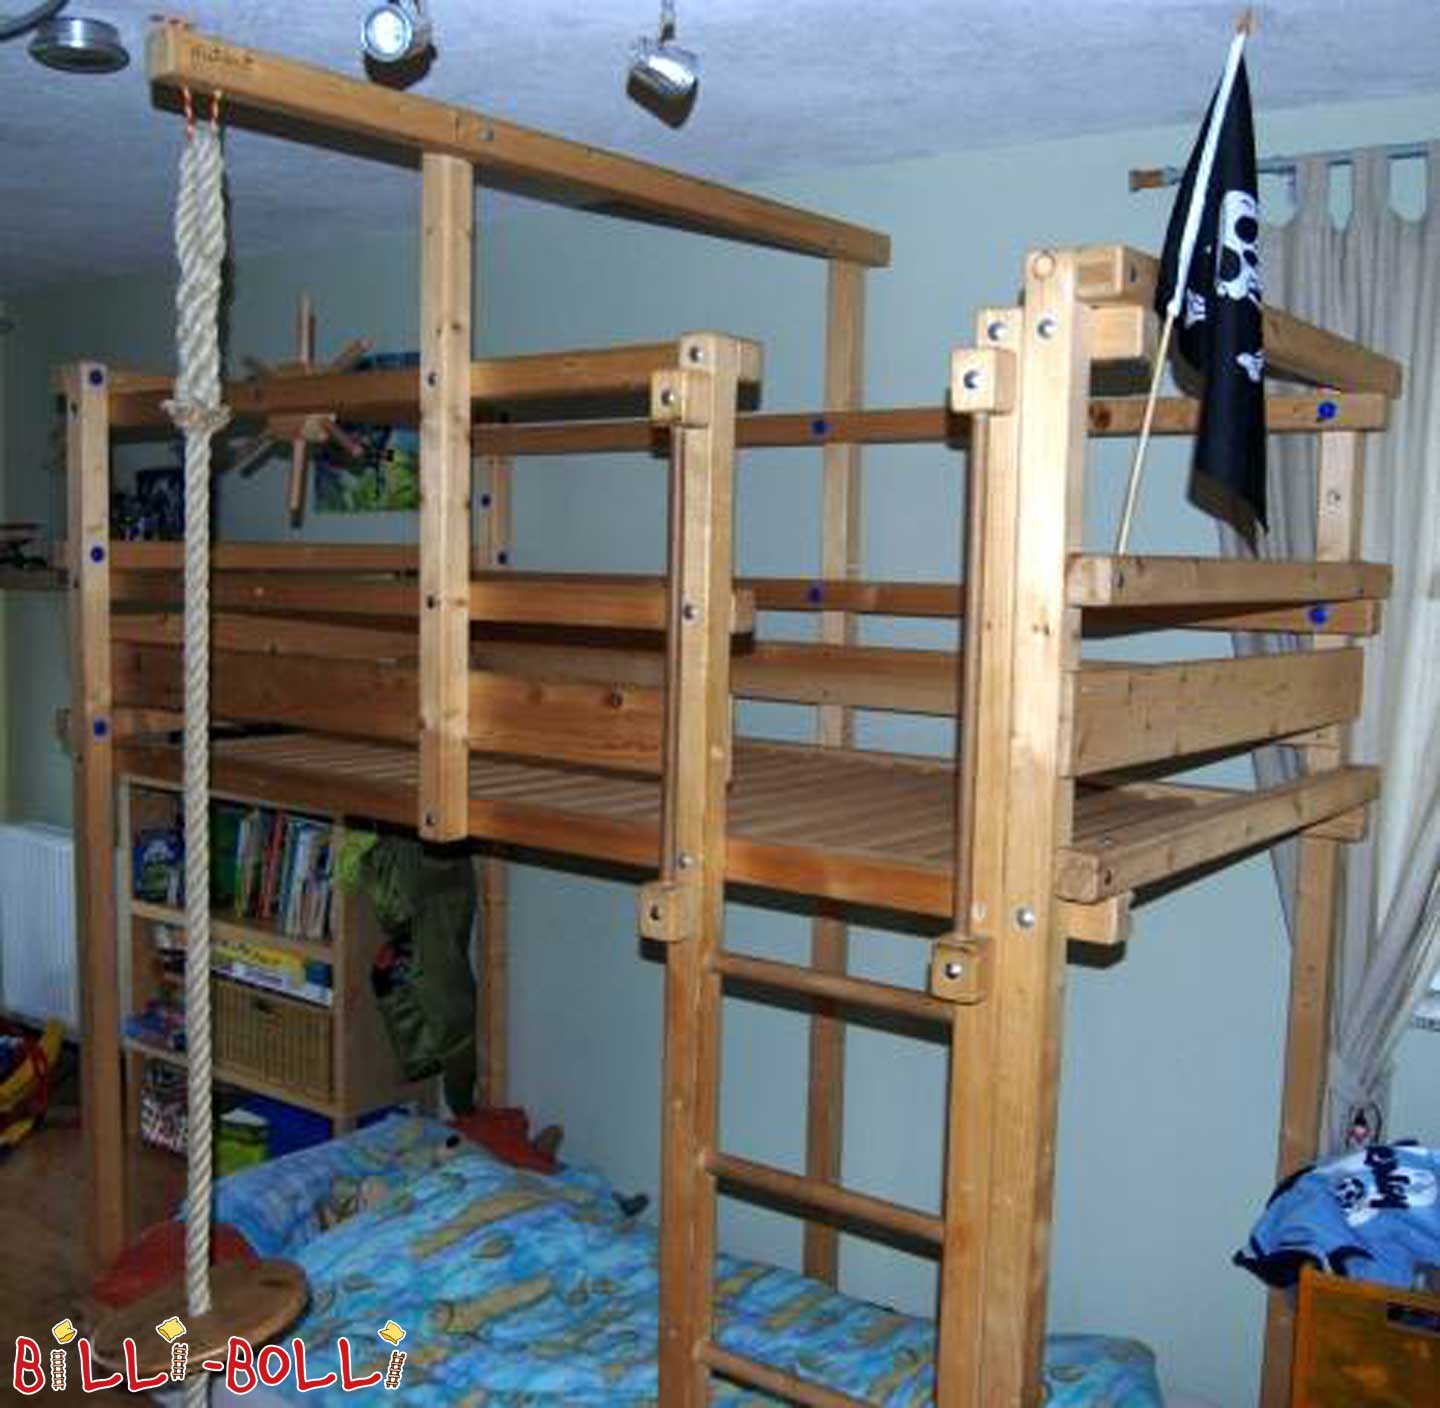 Original Billi-Bolli Adventure Bed (Category: second hand loft bed)